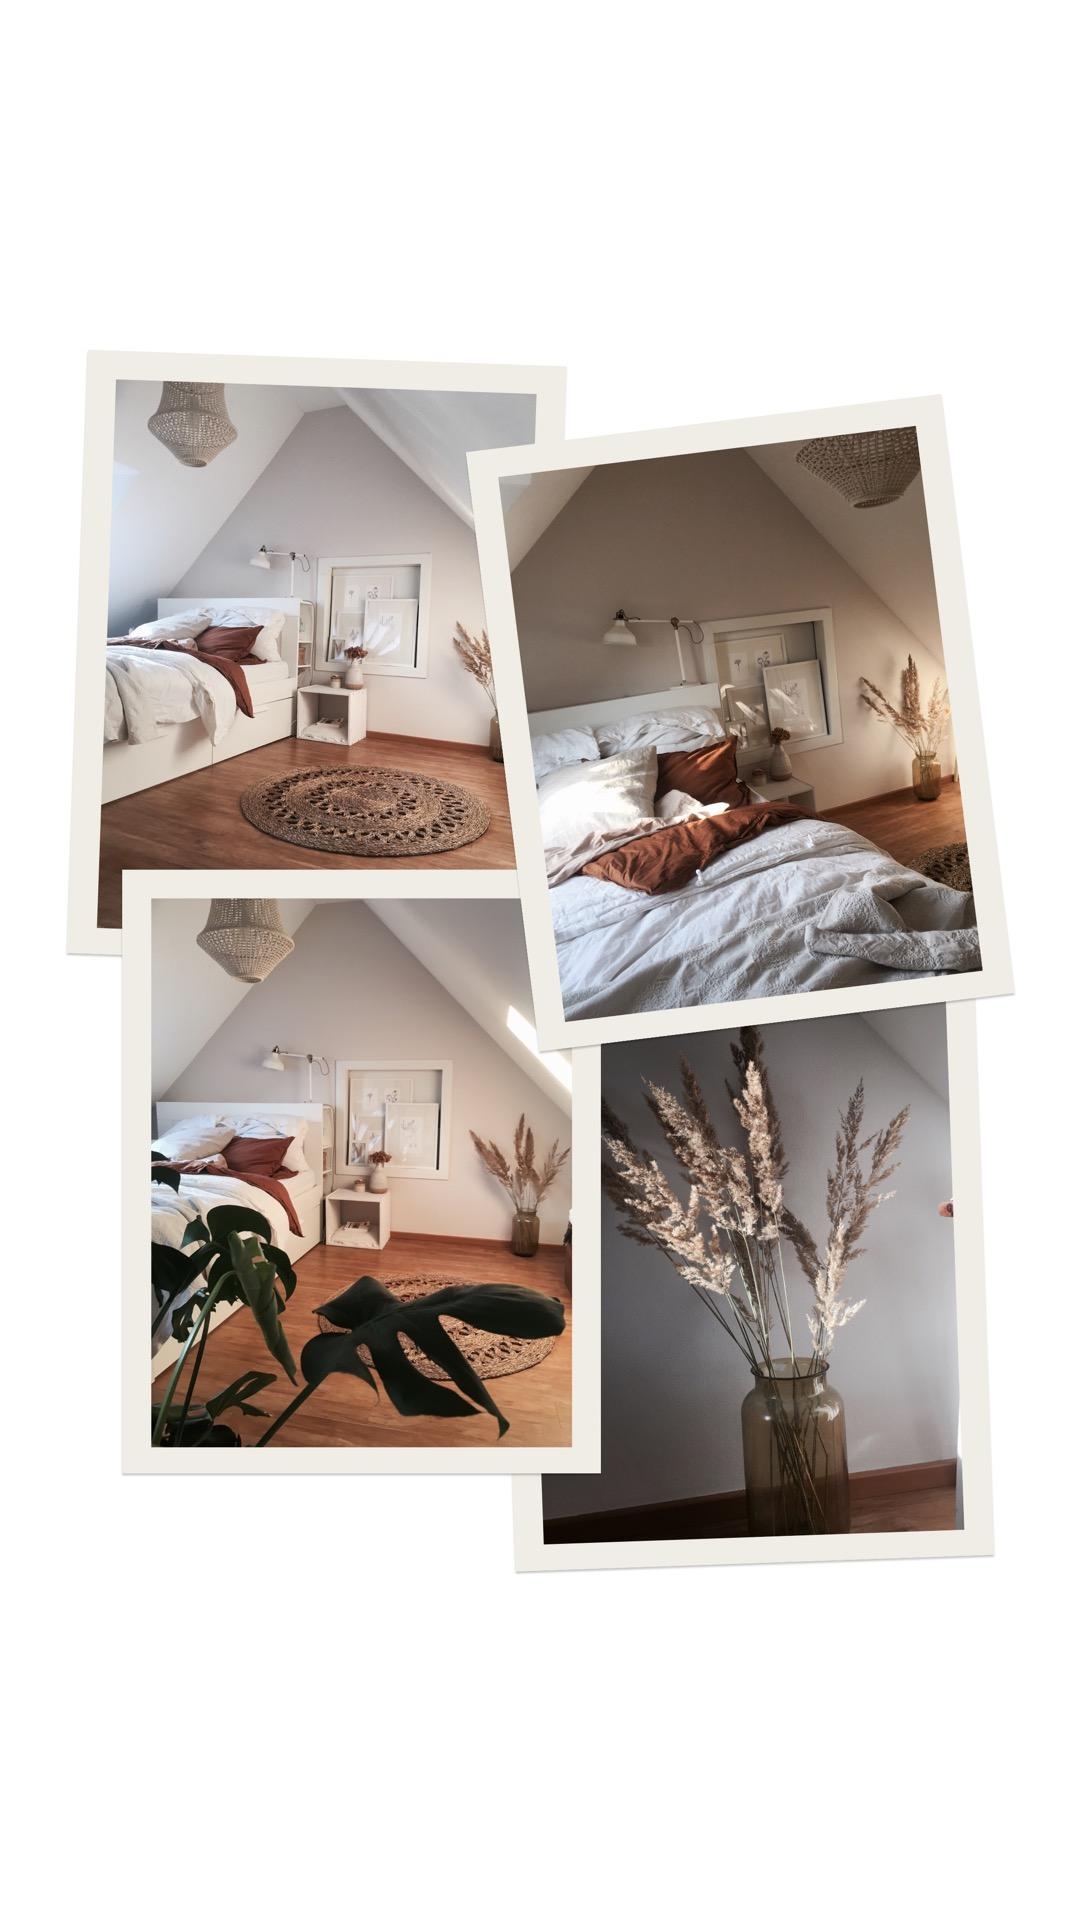 Sleep well in your Bettgestell ✨
#bedroom #interior # couchmagazin